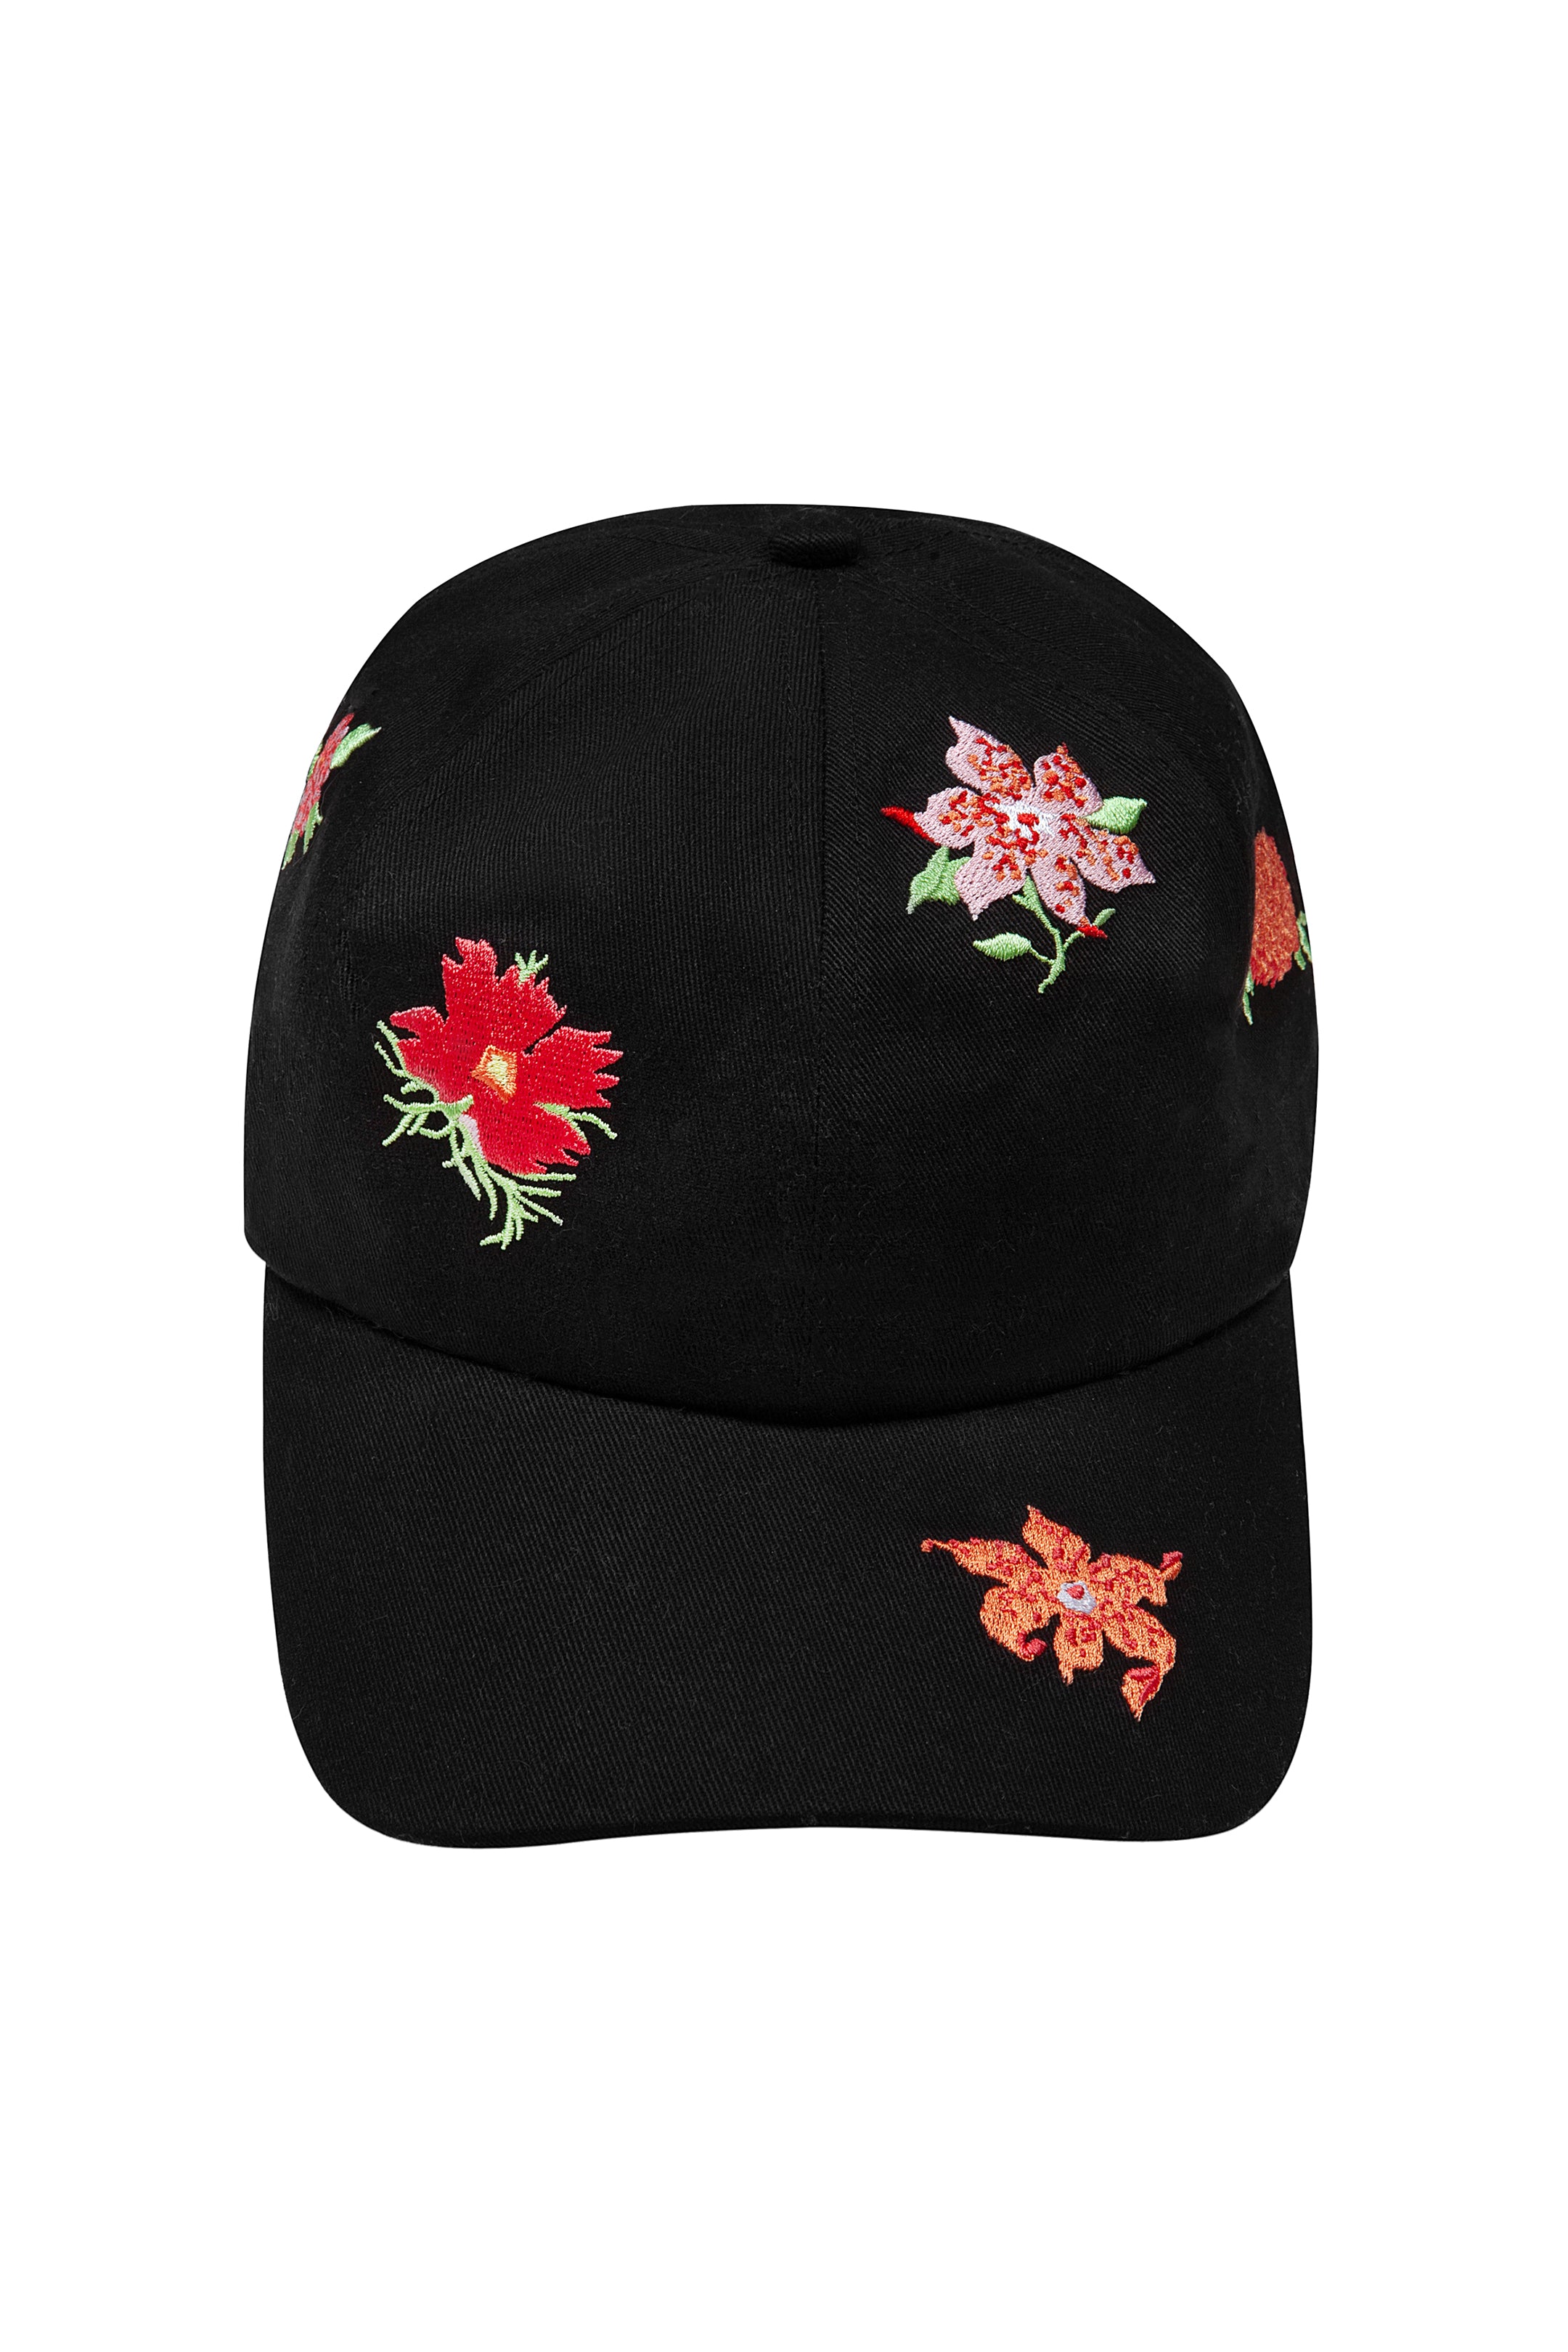 Image of Baseball Hat - Mills Floral